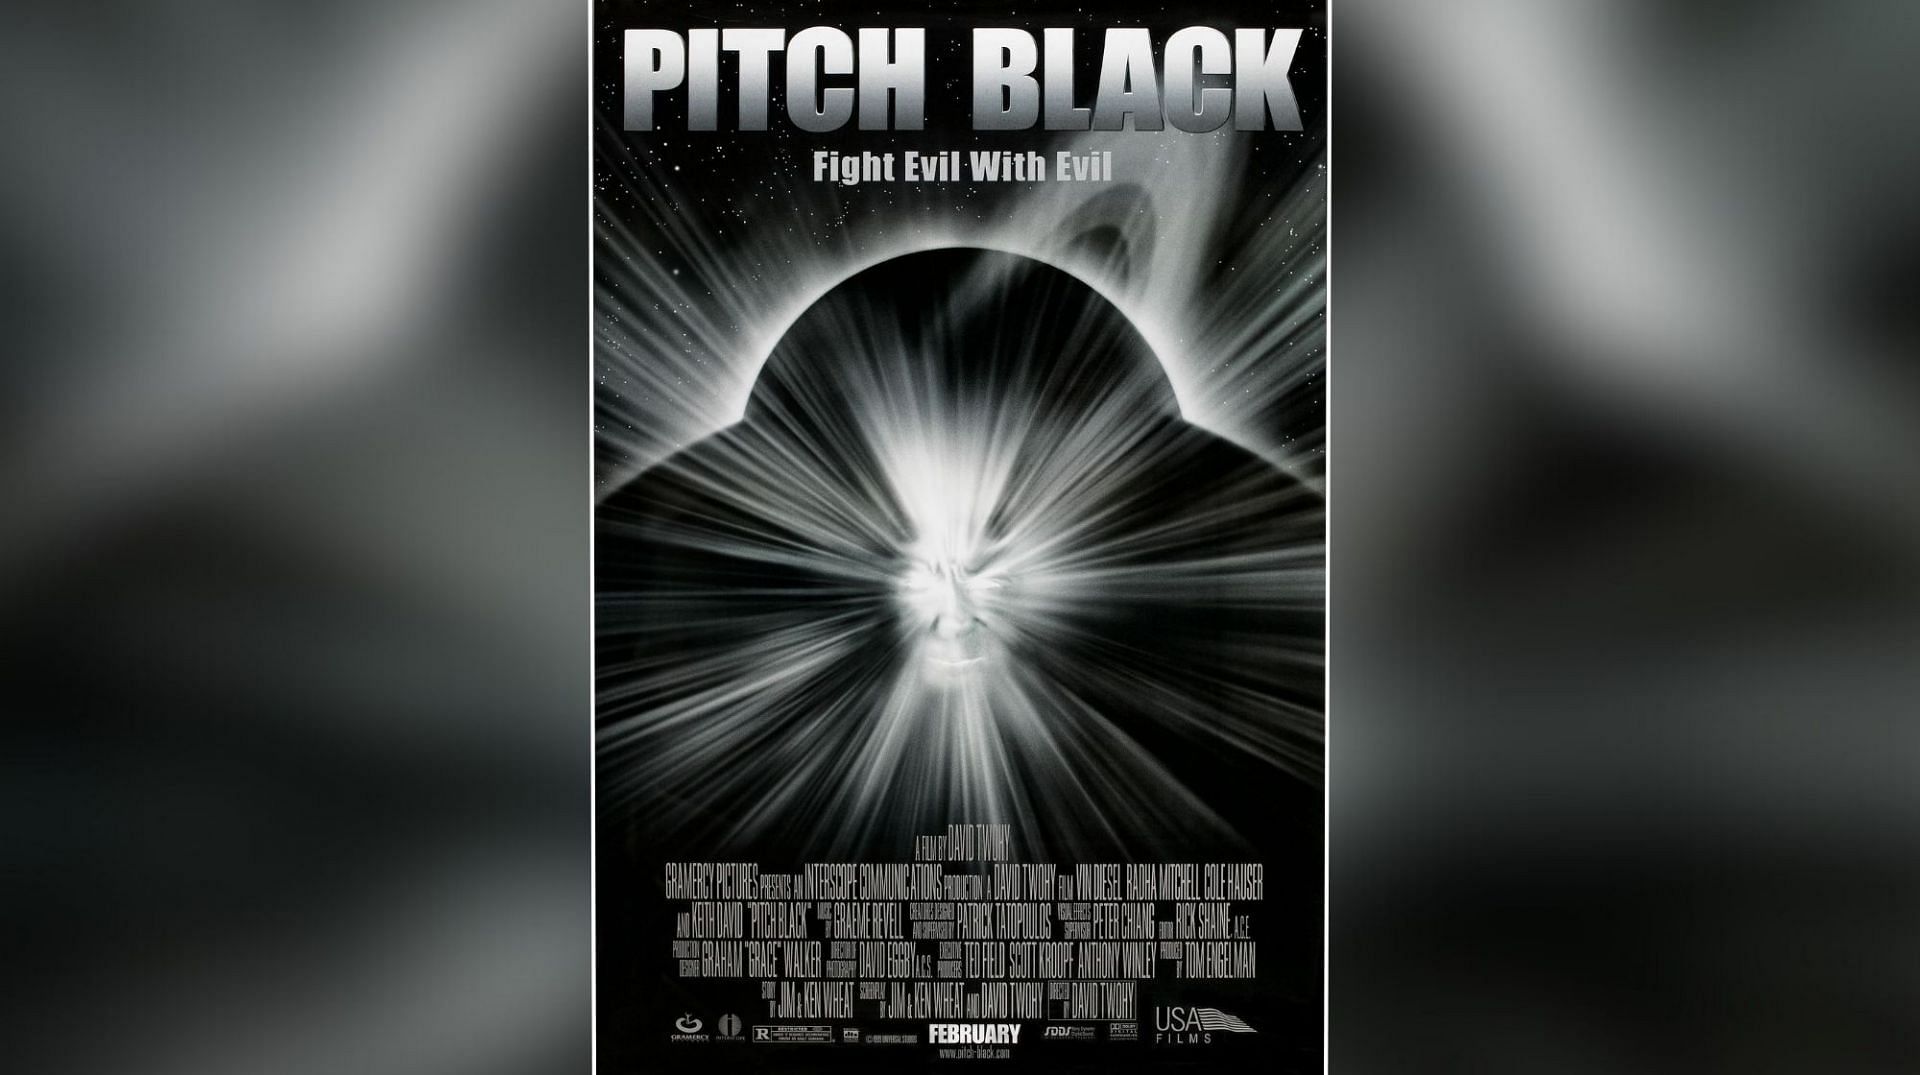 Pitch Black (Image via USA Films)